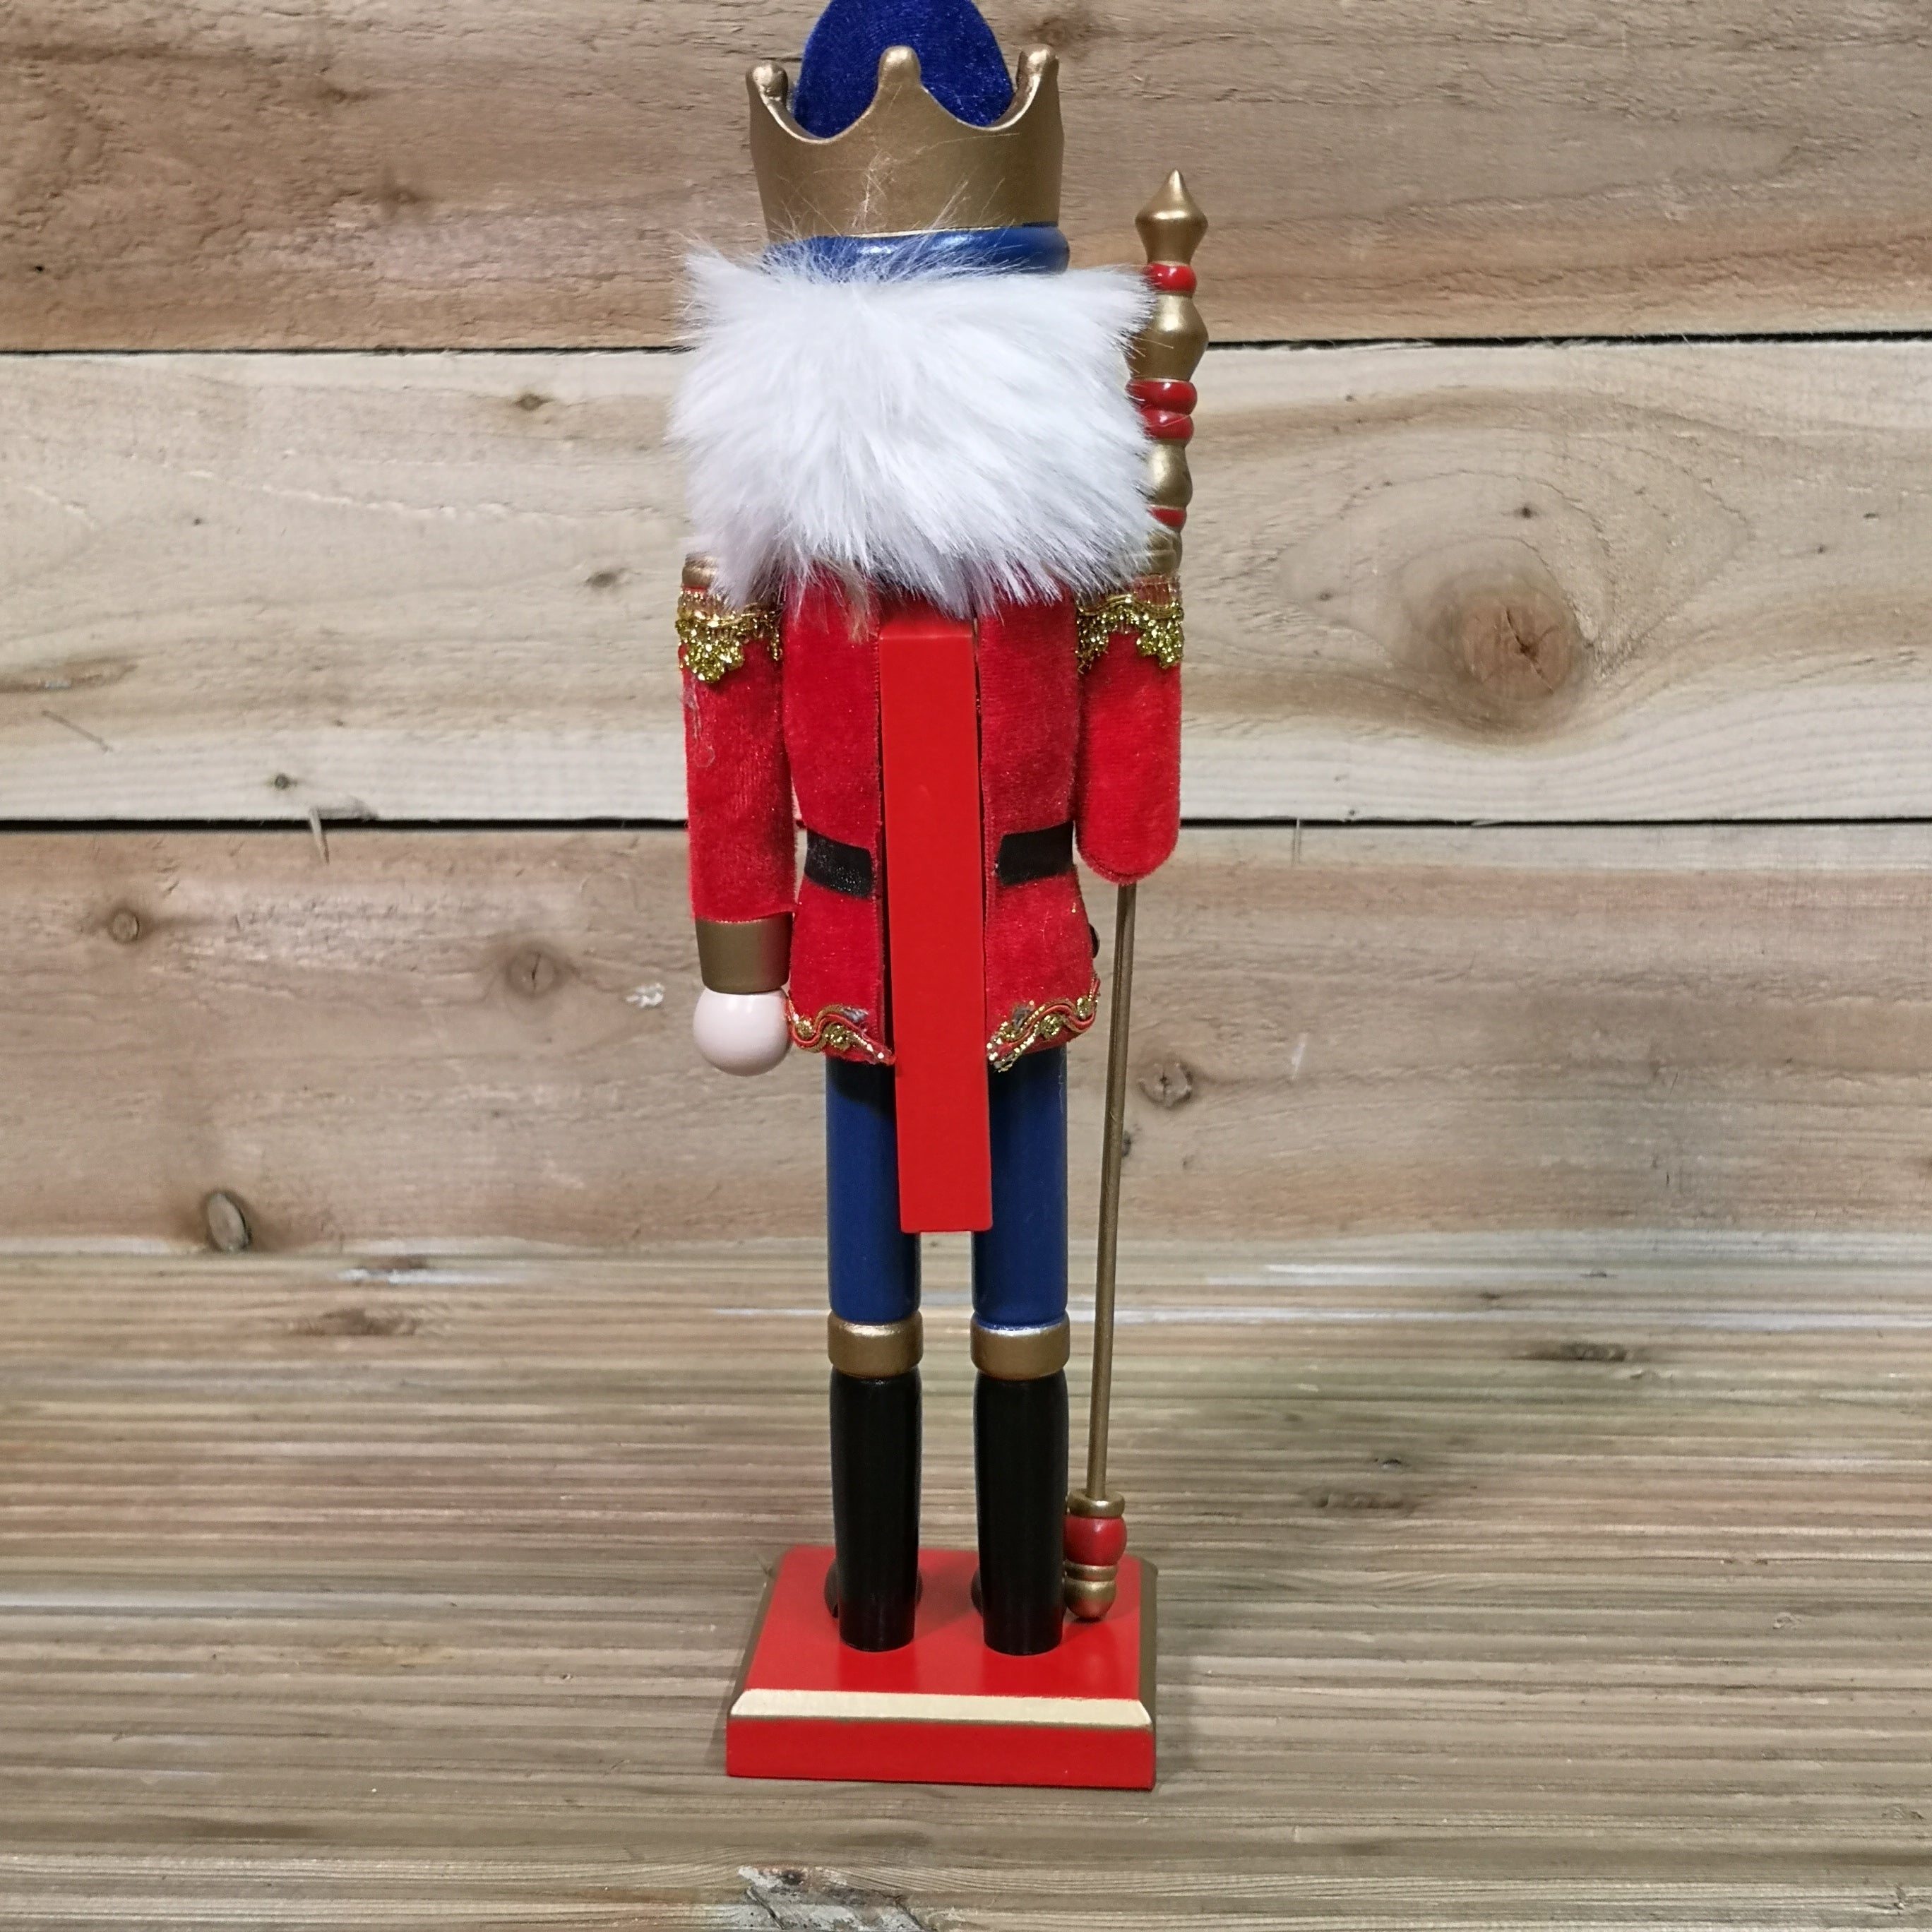 38cm Christmas Nutcracker Wooden Soldier Decoration with Blue Hat